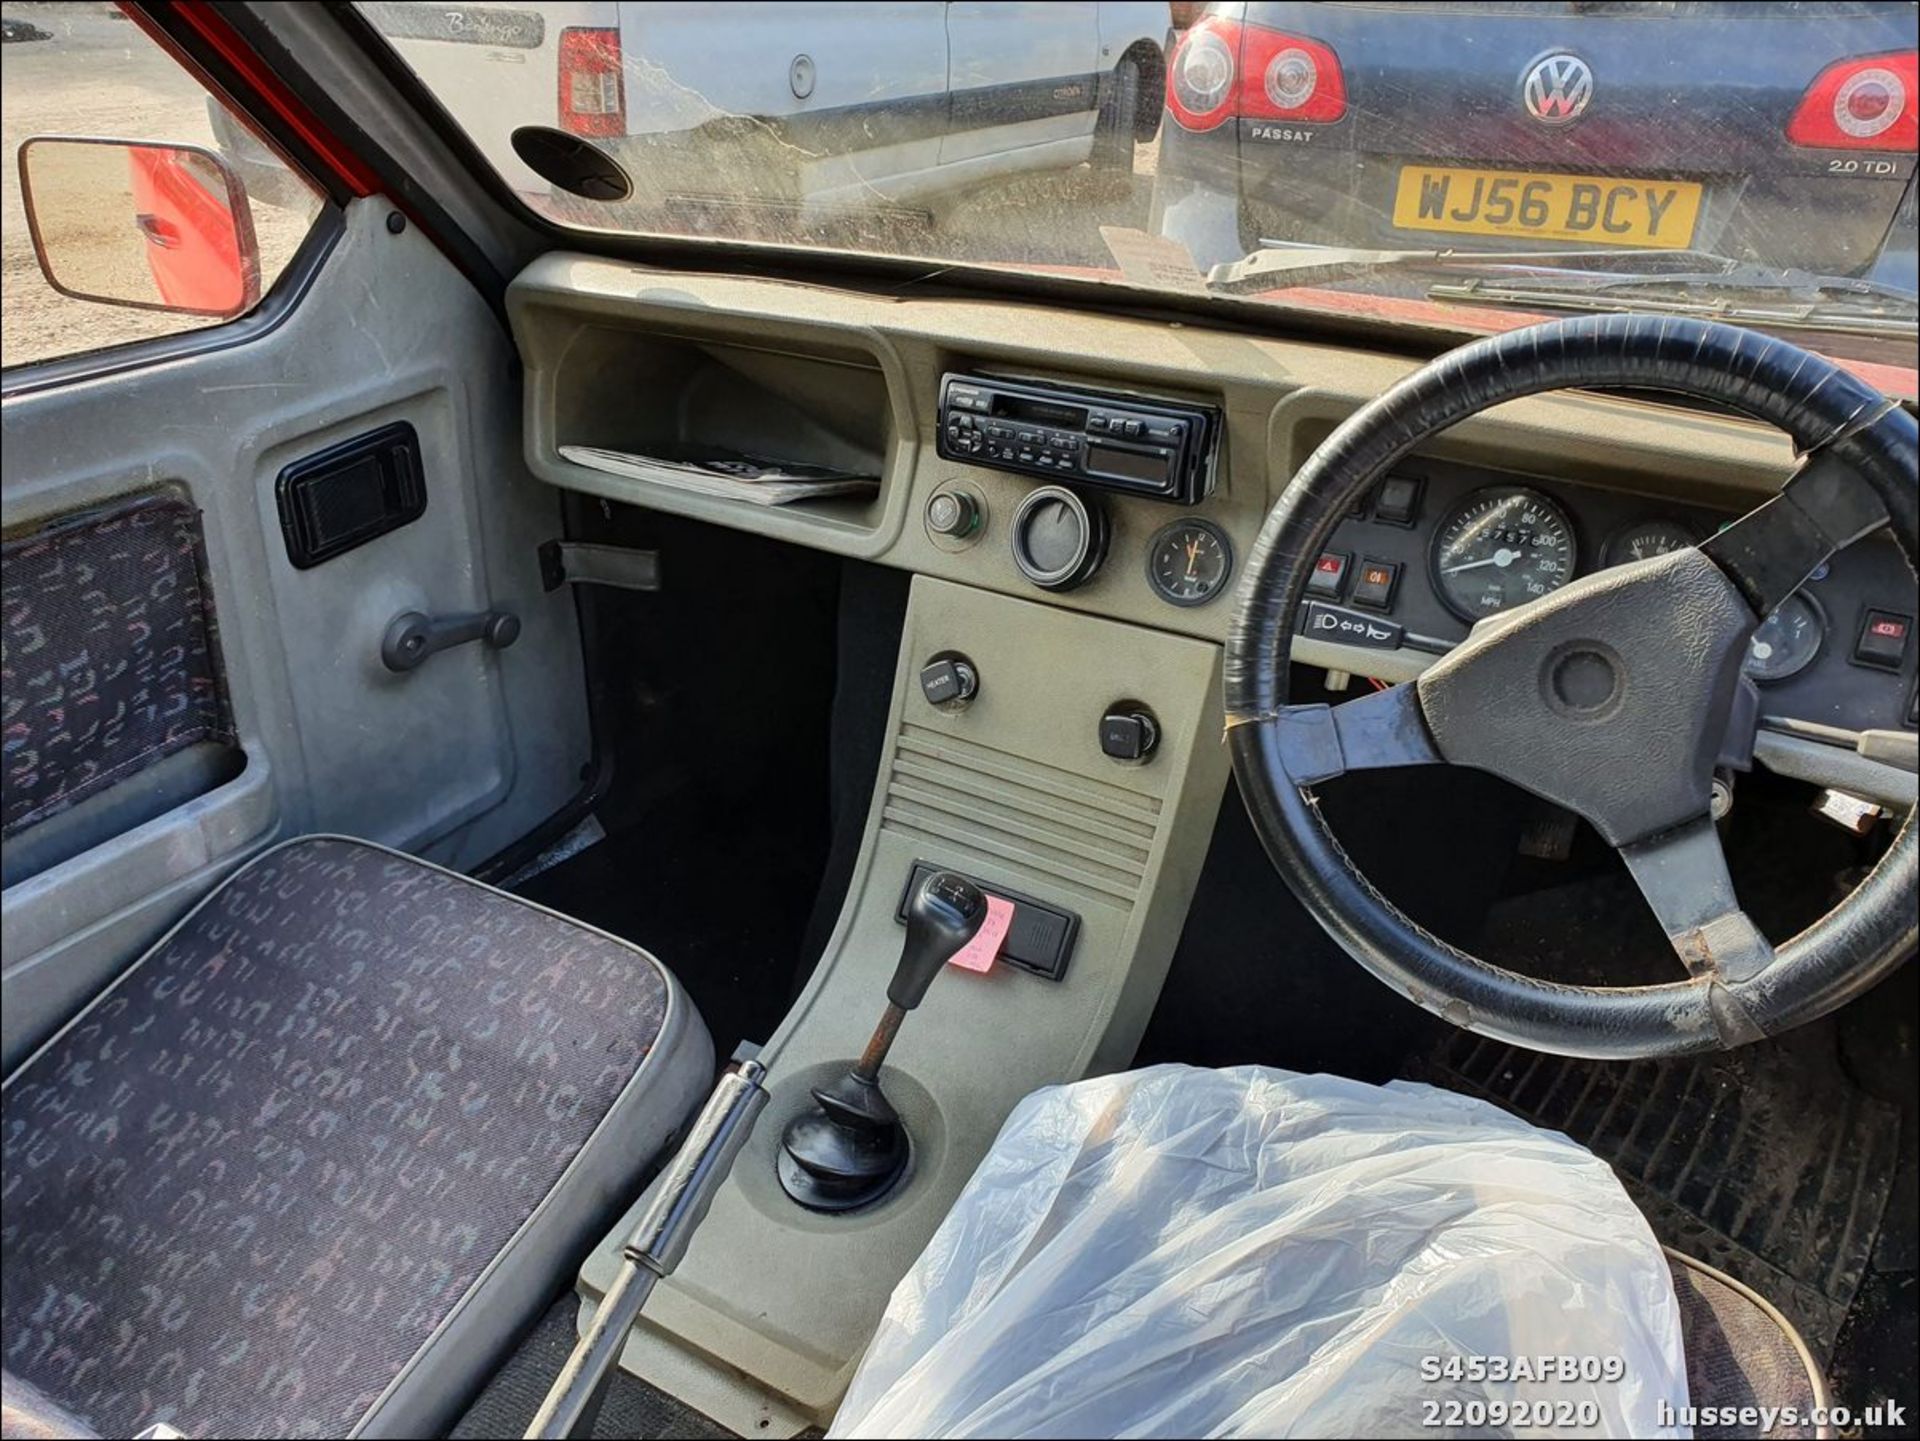 1998 RELIANT RIALTO VAN - 848cc 3dr Van (Red, 57k) - Image 9 of 10